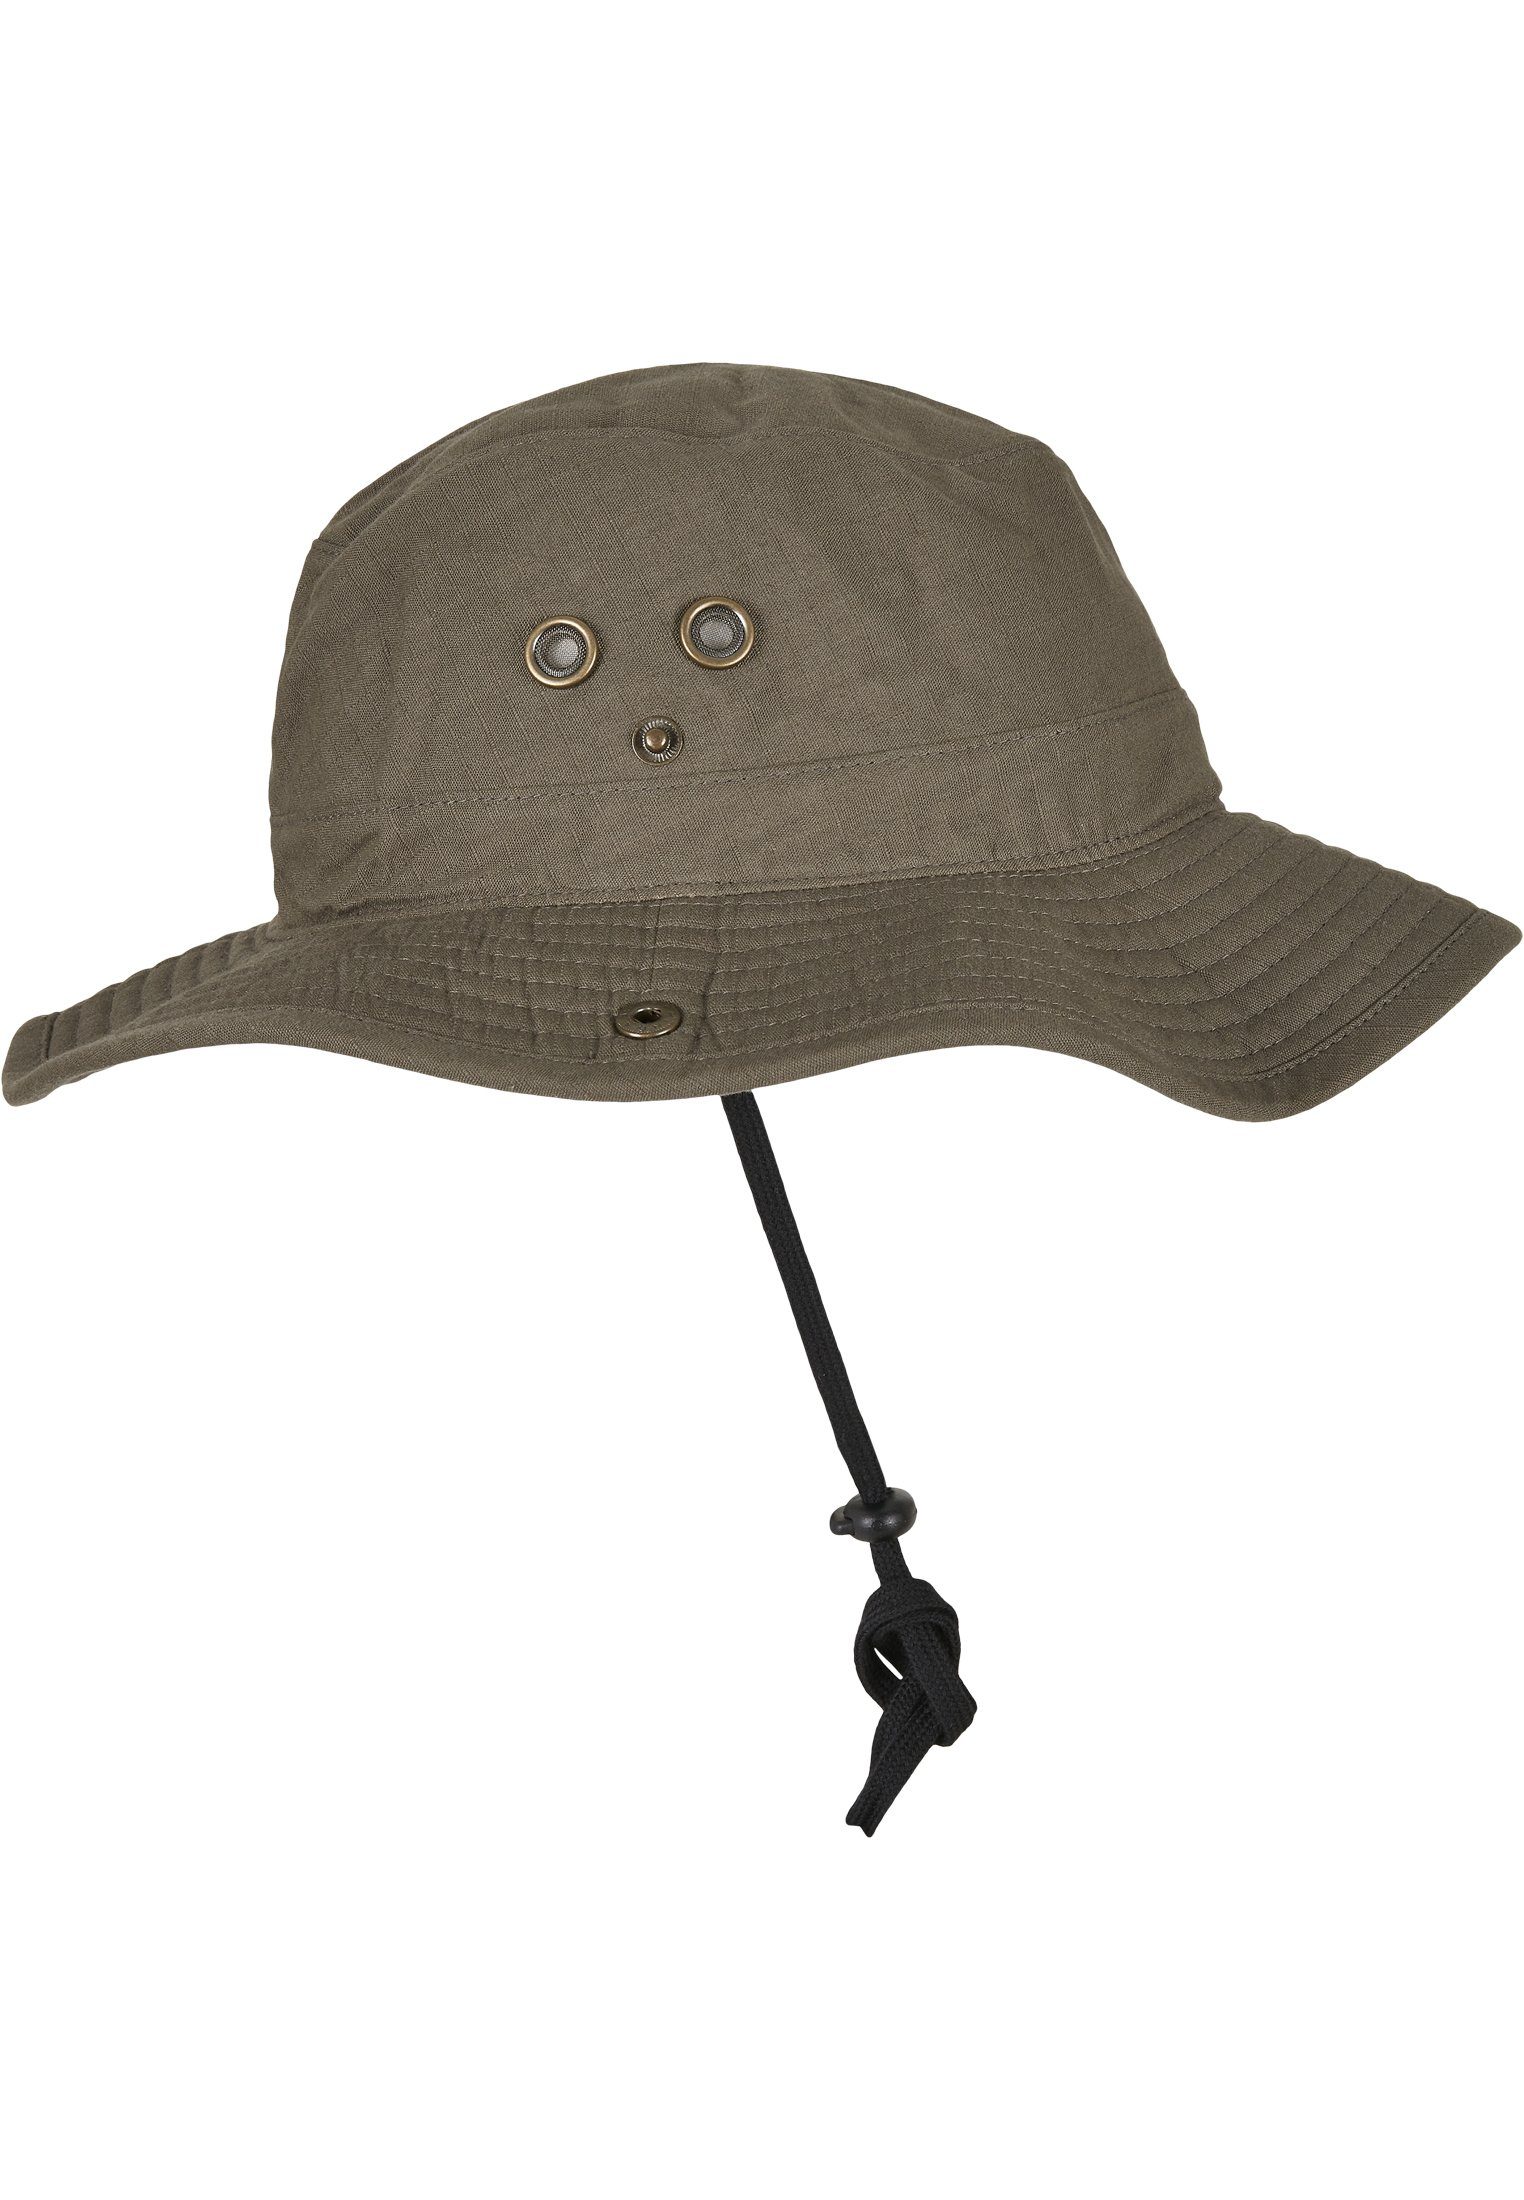 Flexfit Flex Cap darkolive Hat Angler